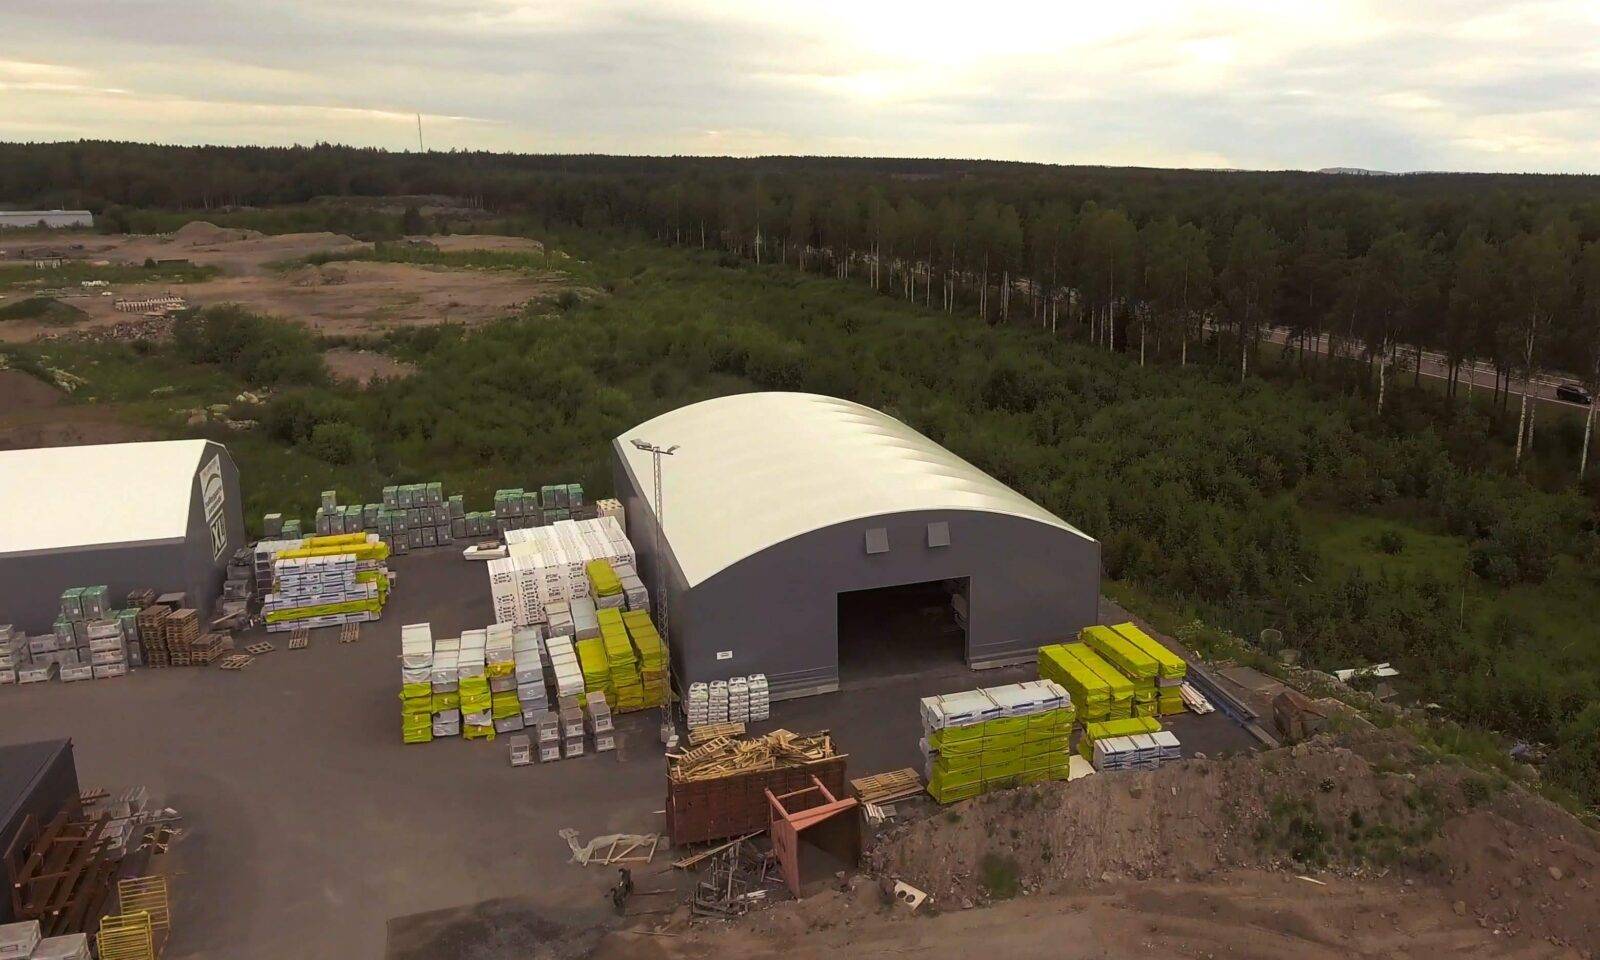 Two warehouses/storage tents at C24 Bygg Kompaniet